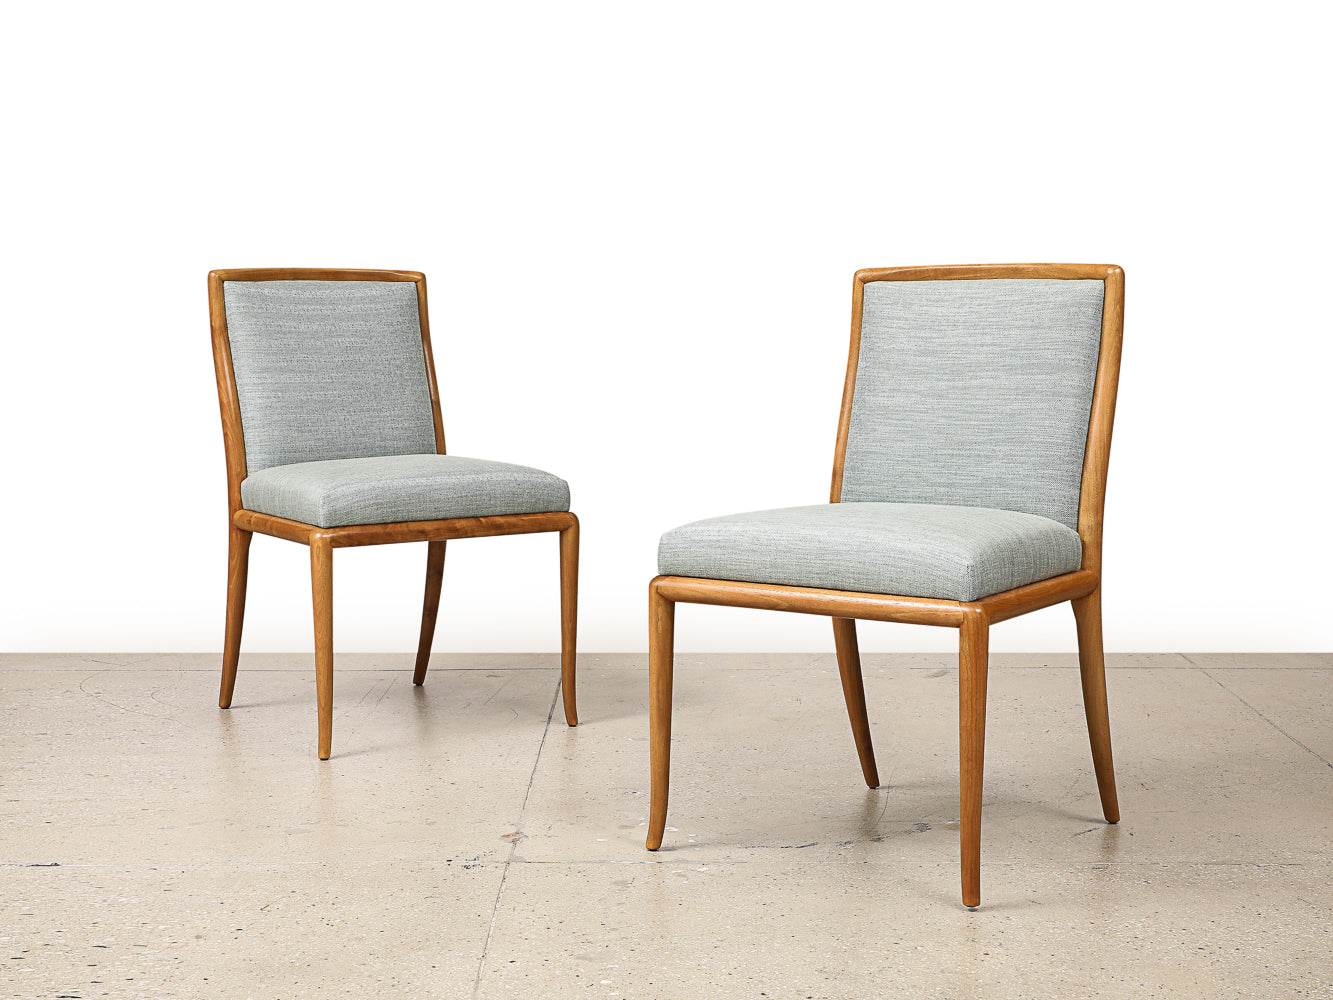 Pair of Side Chairs by T.H. Robsjohn-Gibbings